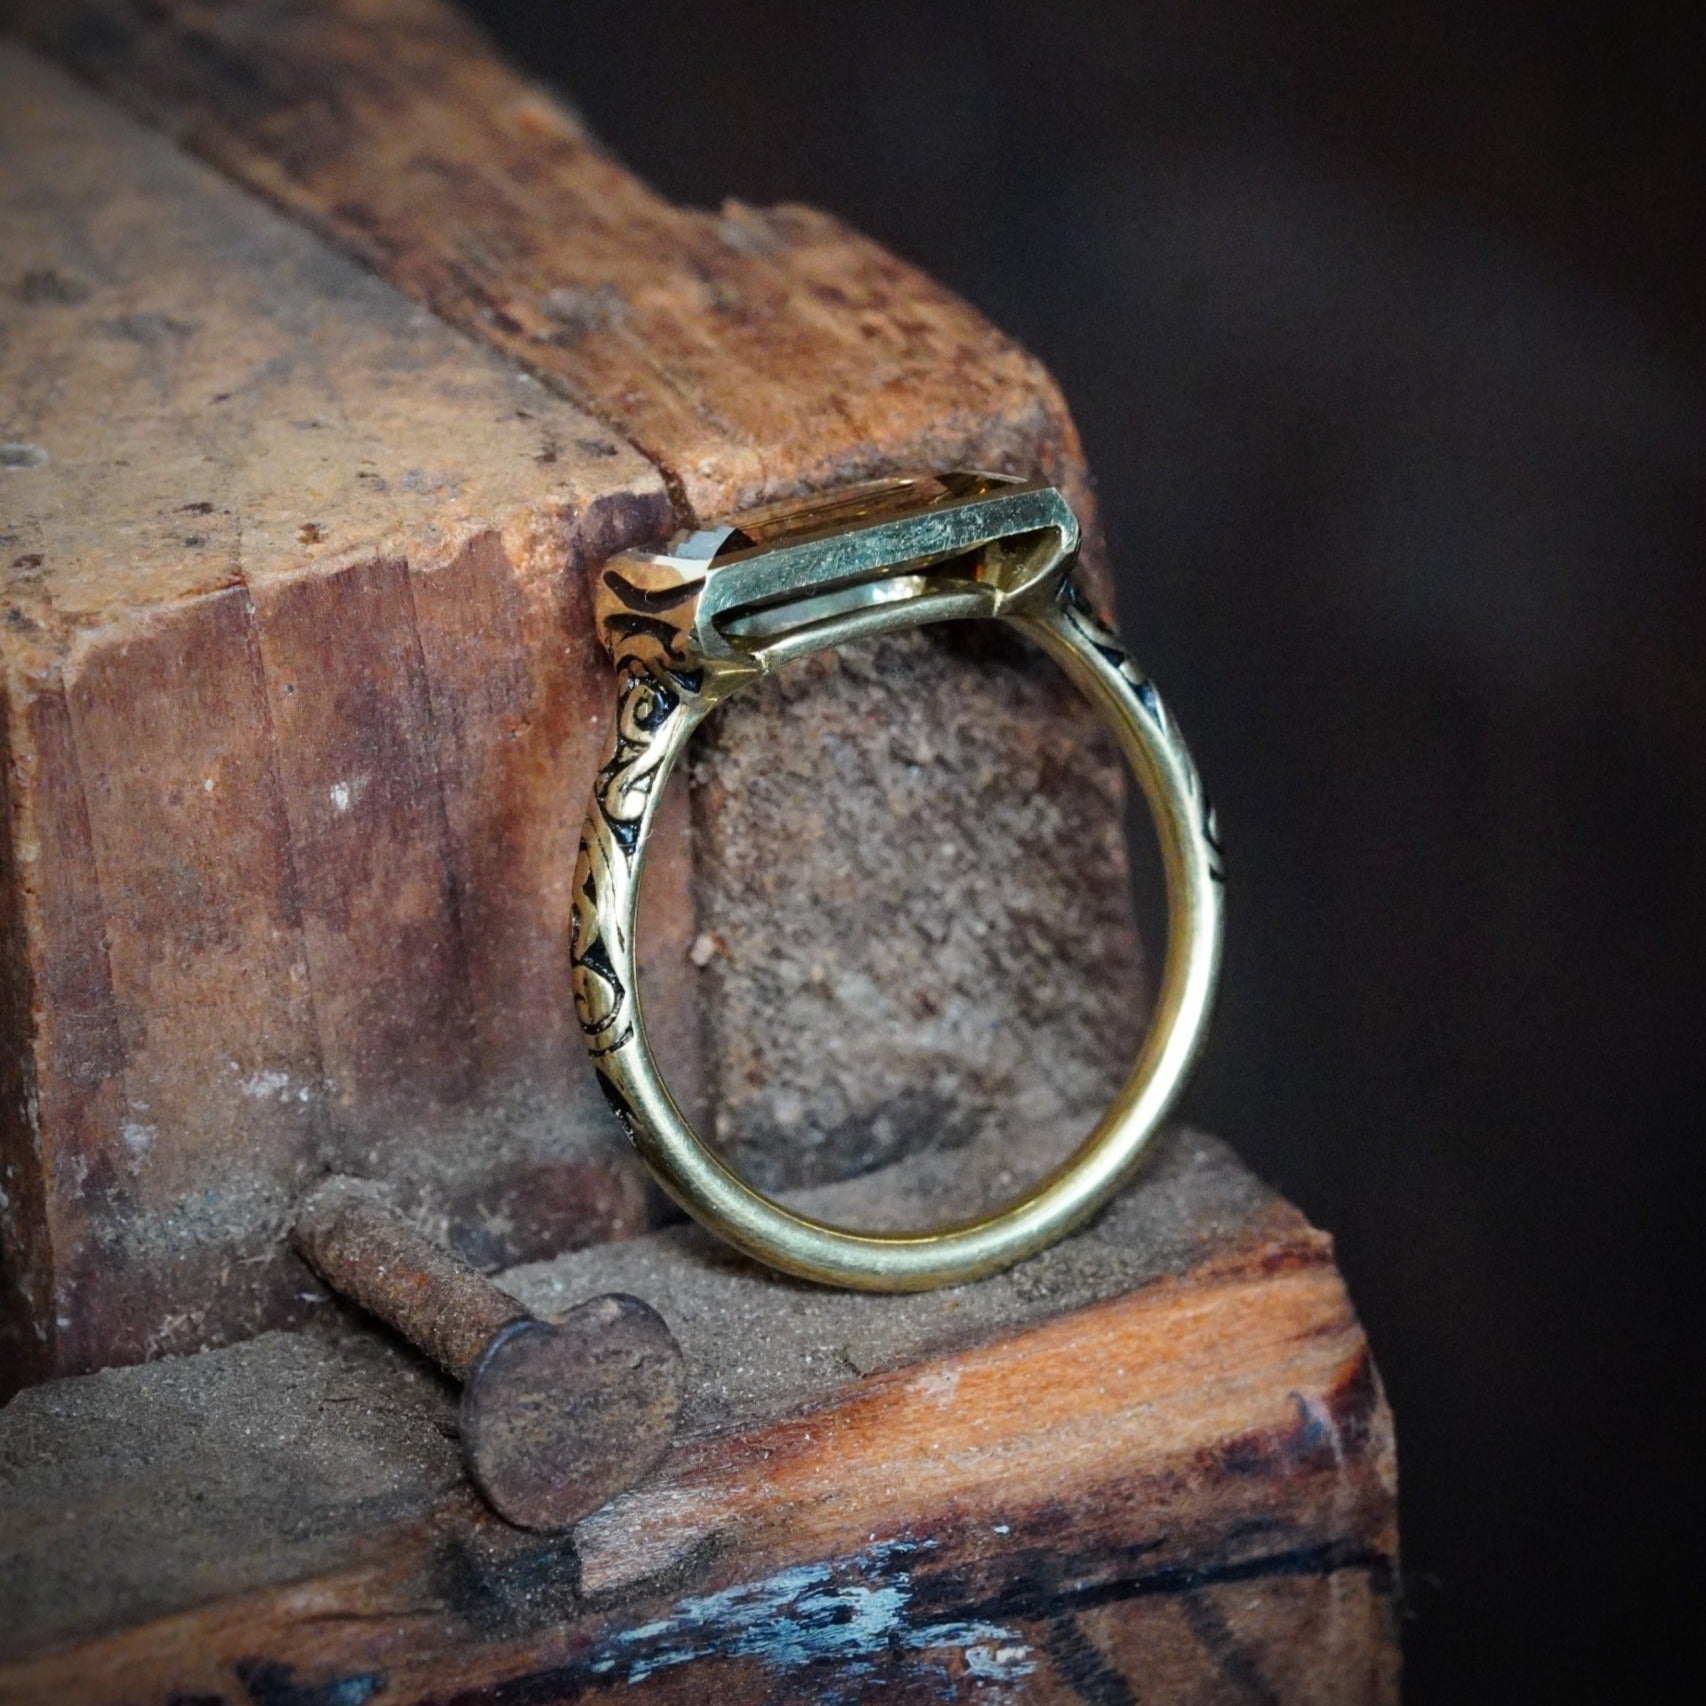 Renaissance Inspired 1.56 Carat Step Cut Diamond Ring